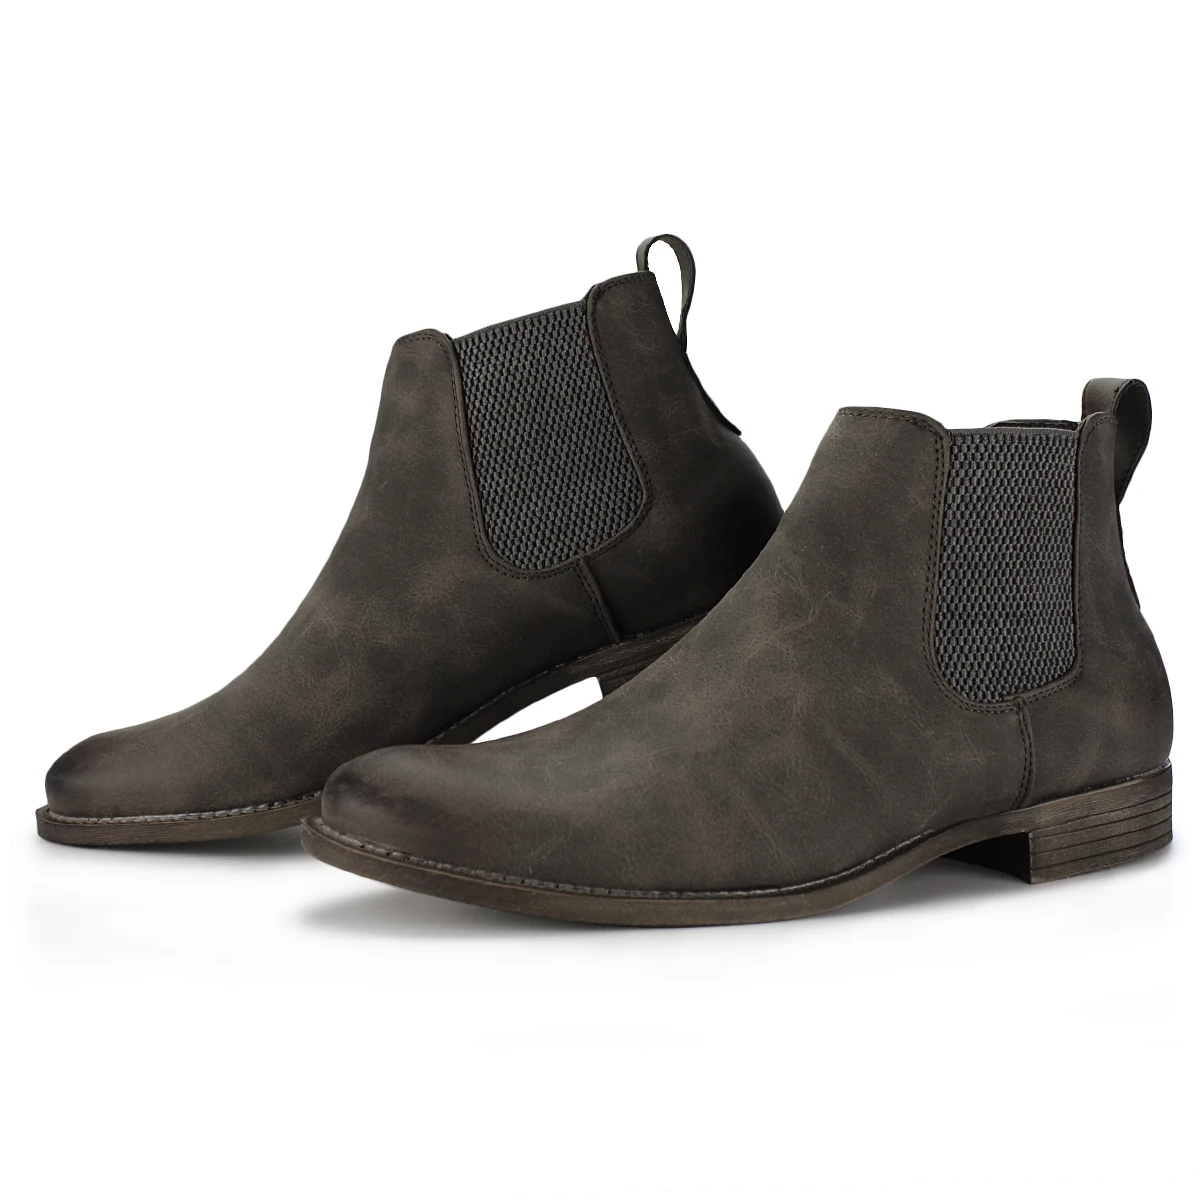 Buy > waterproof boots ankle > in stock